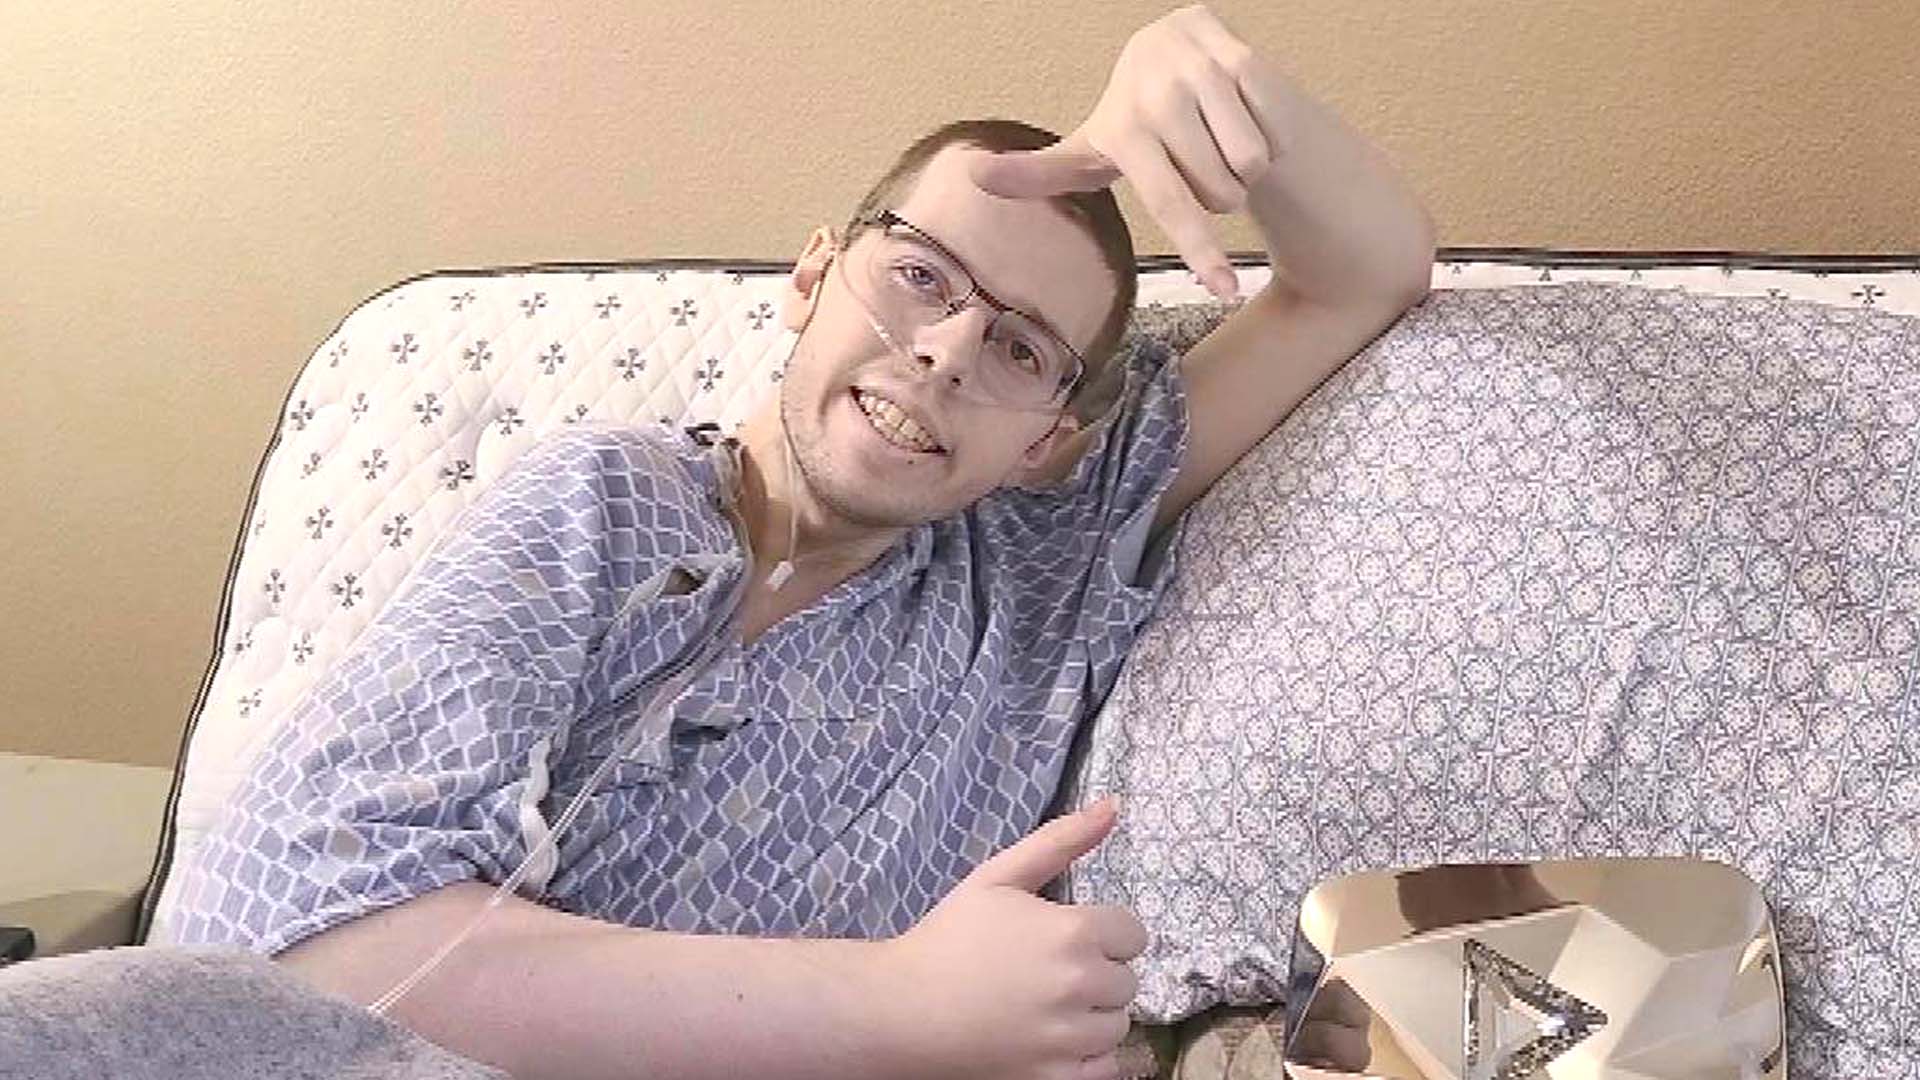 Technoblade, Popular Minecraft r, Dies at 23 After Cancer Battle